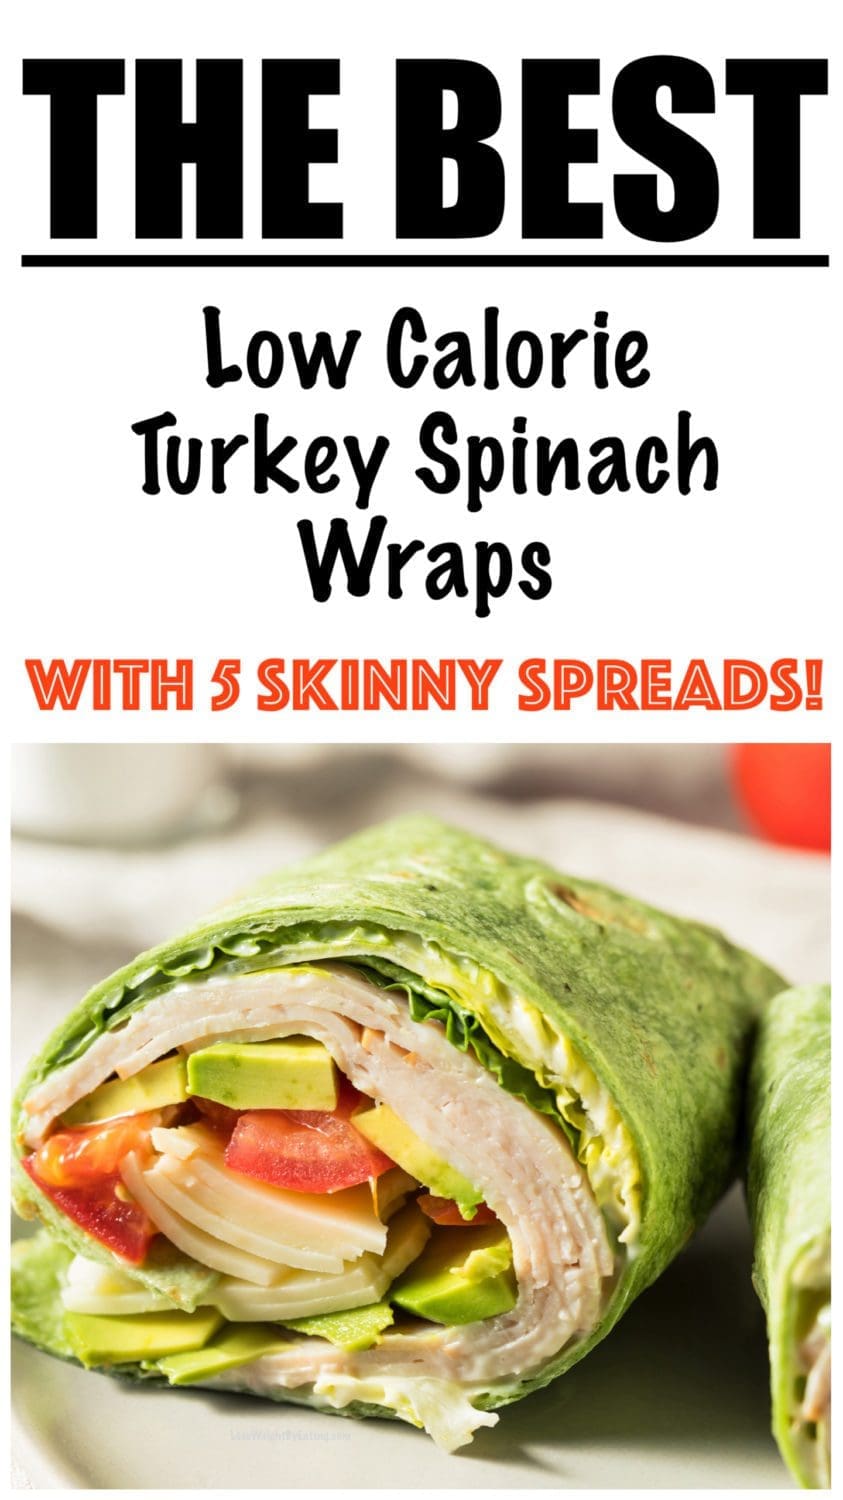 Turkey Spinach Wrap Recipe